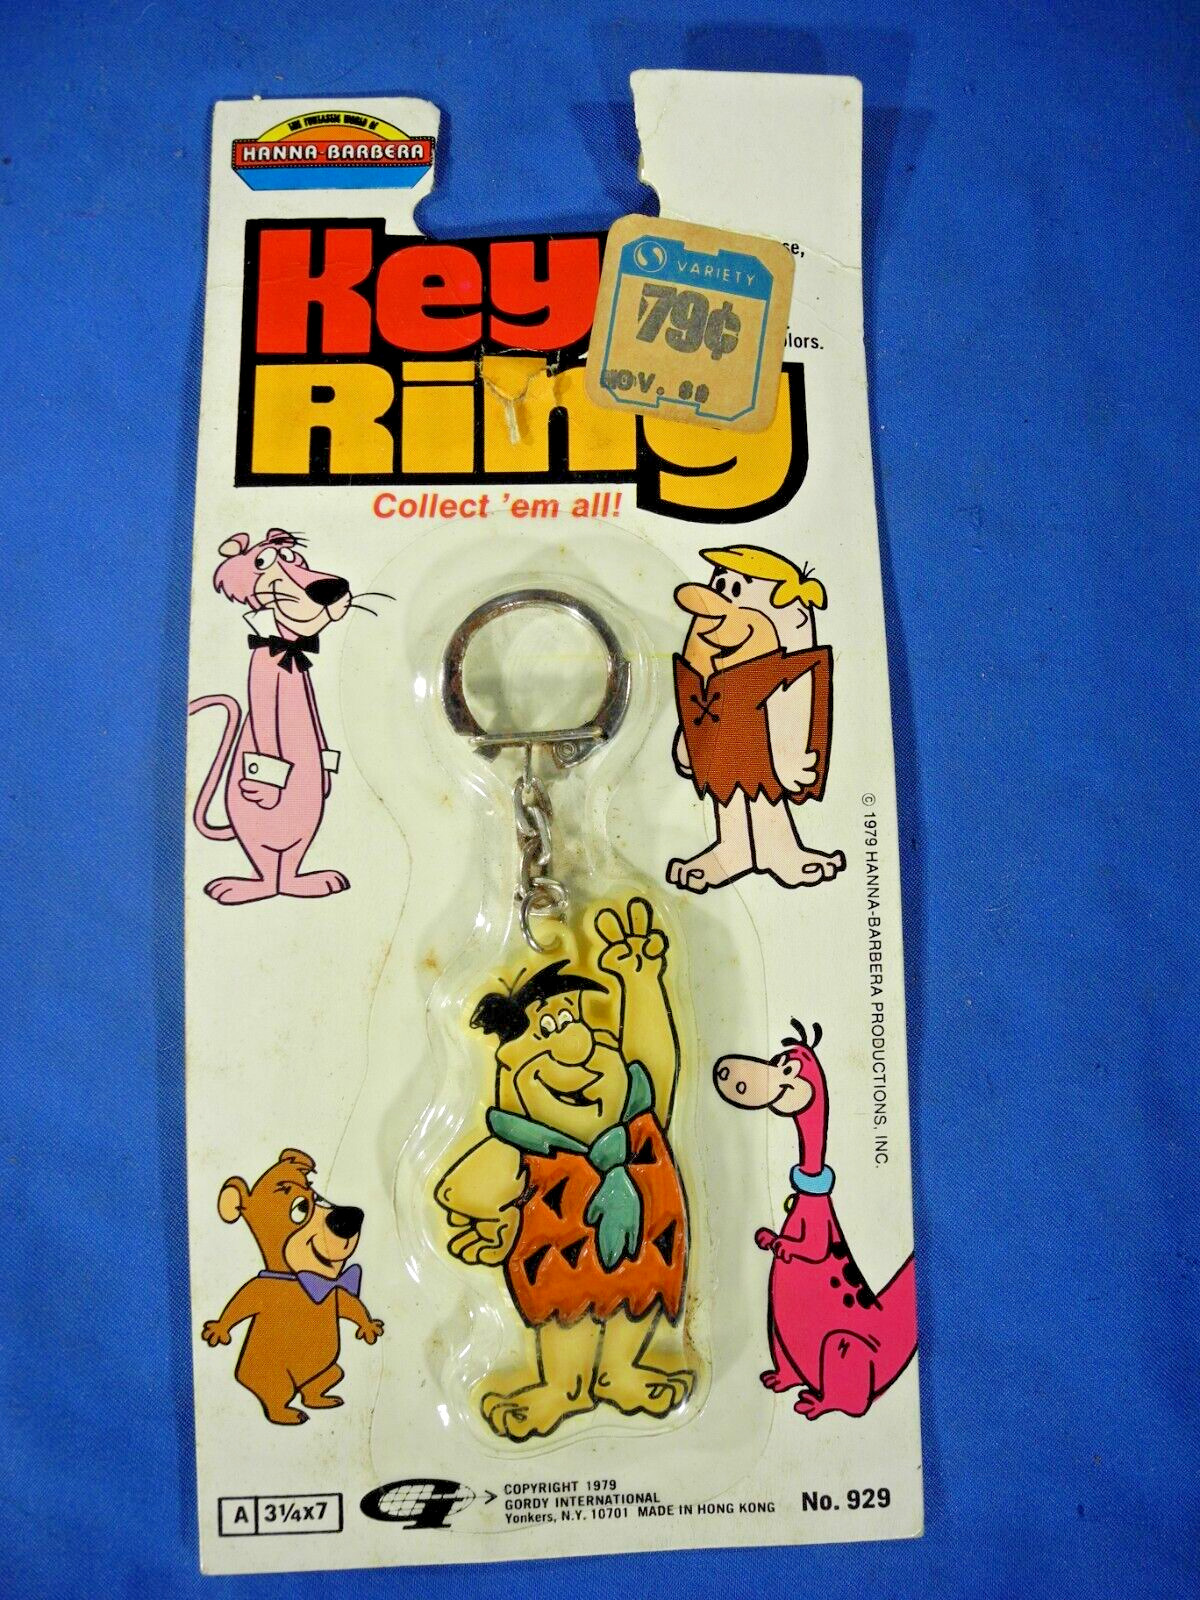 Fred Flintstone (Hanna Barbera)  key chain NOS, 1979 Gordy International No. 929